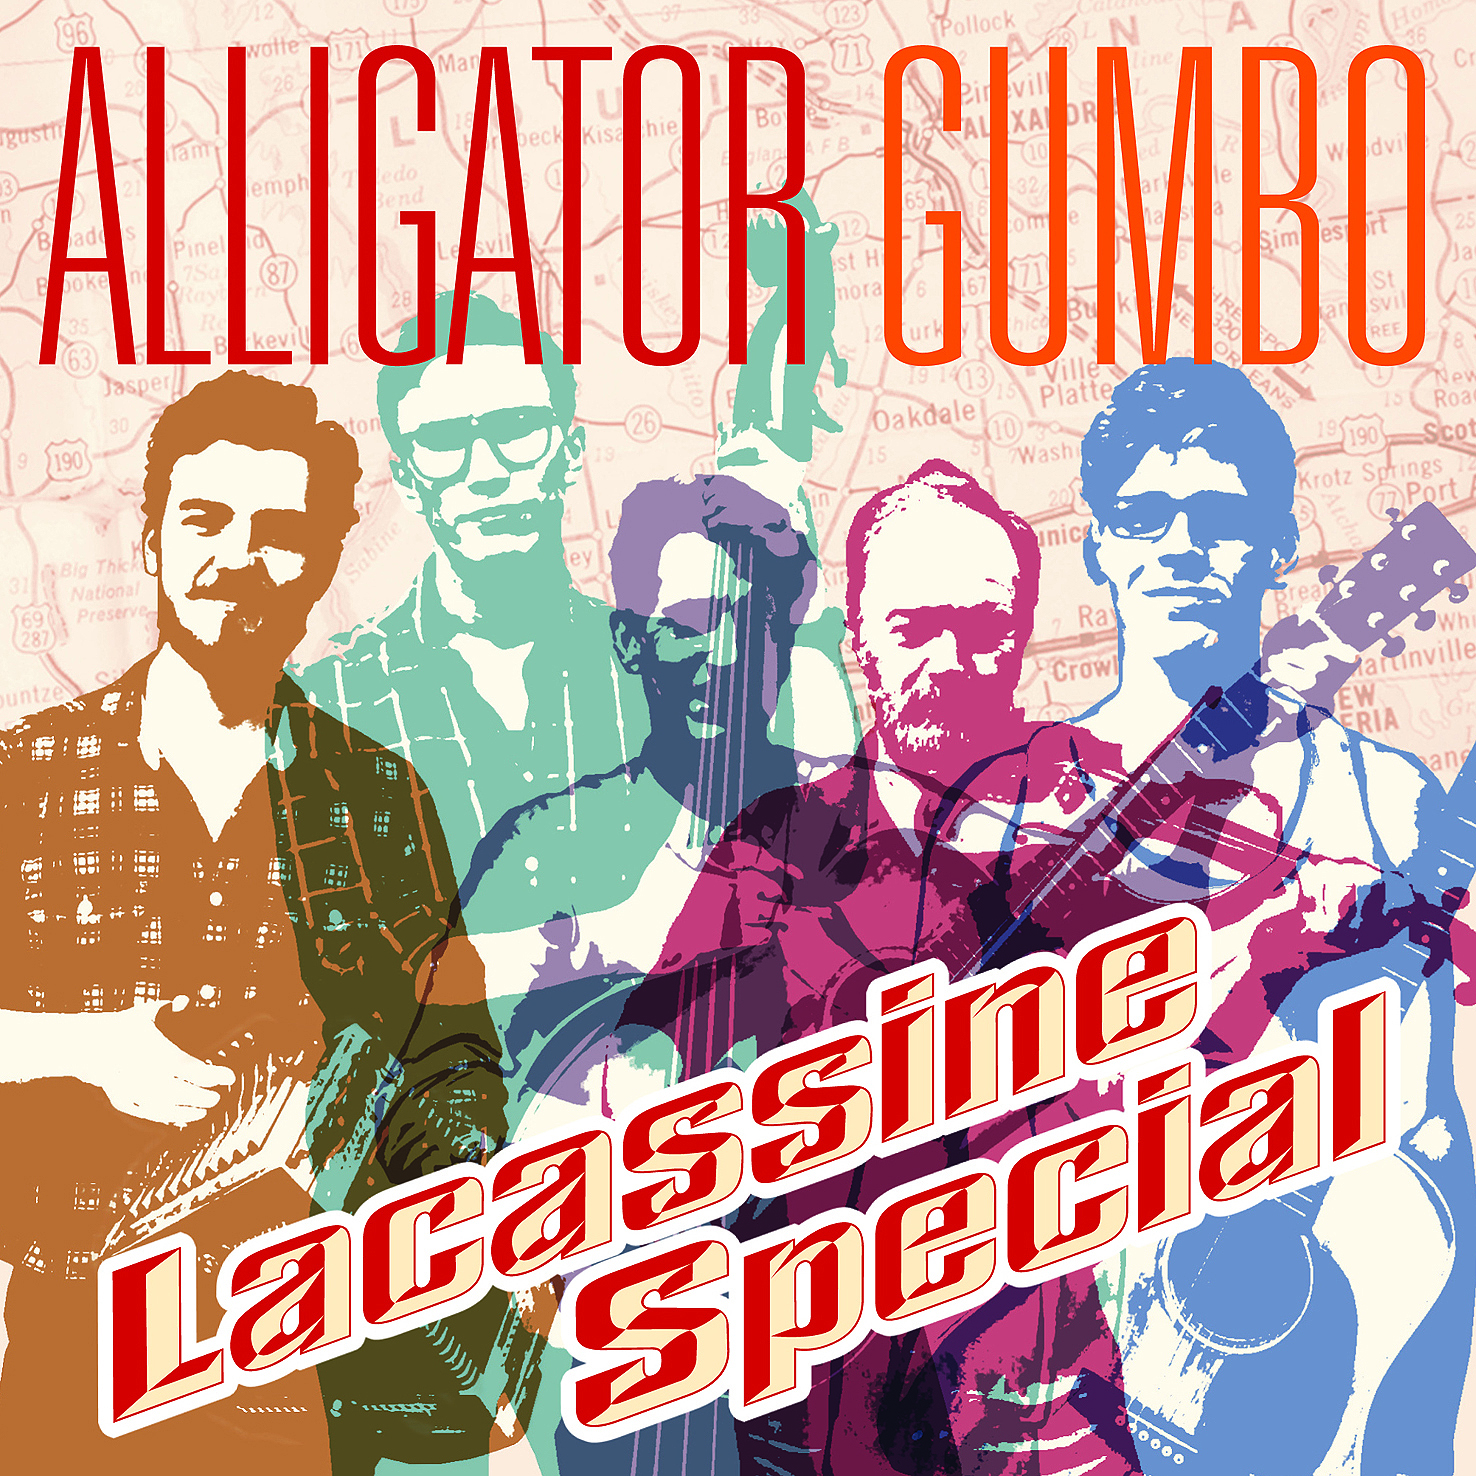 Alligator Gumbo - Lacassine Special monophon MPHEP009, 2012.